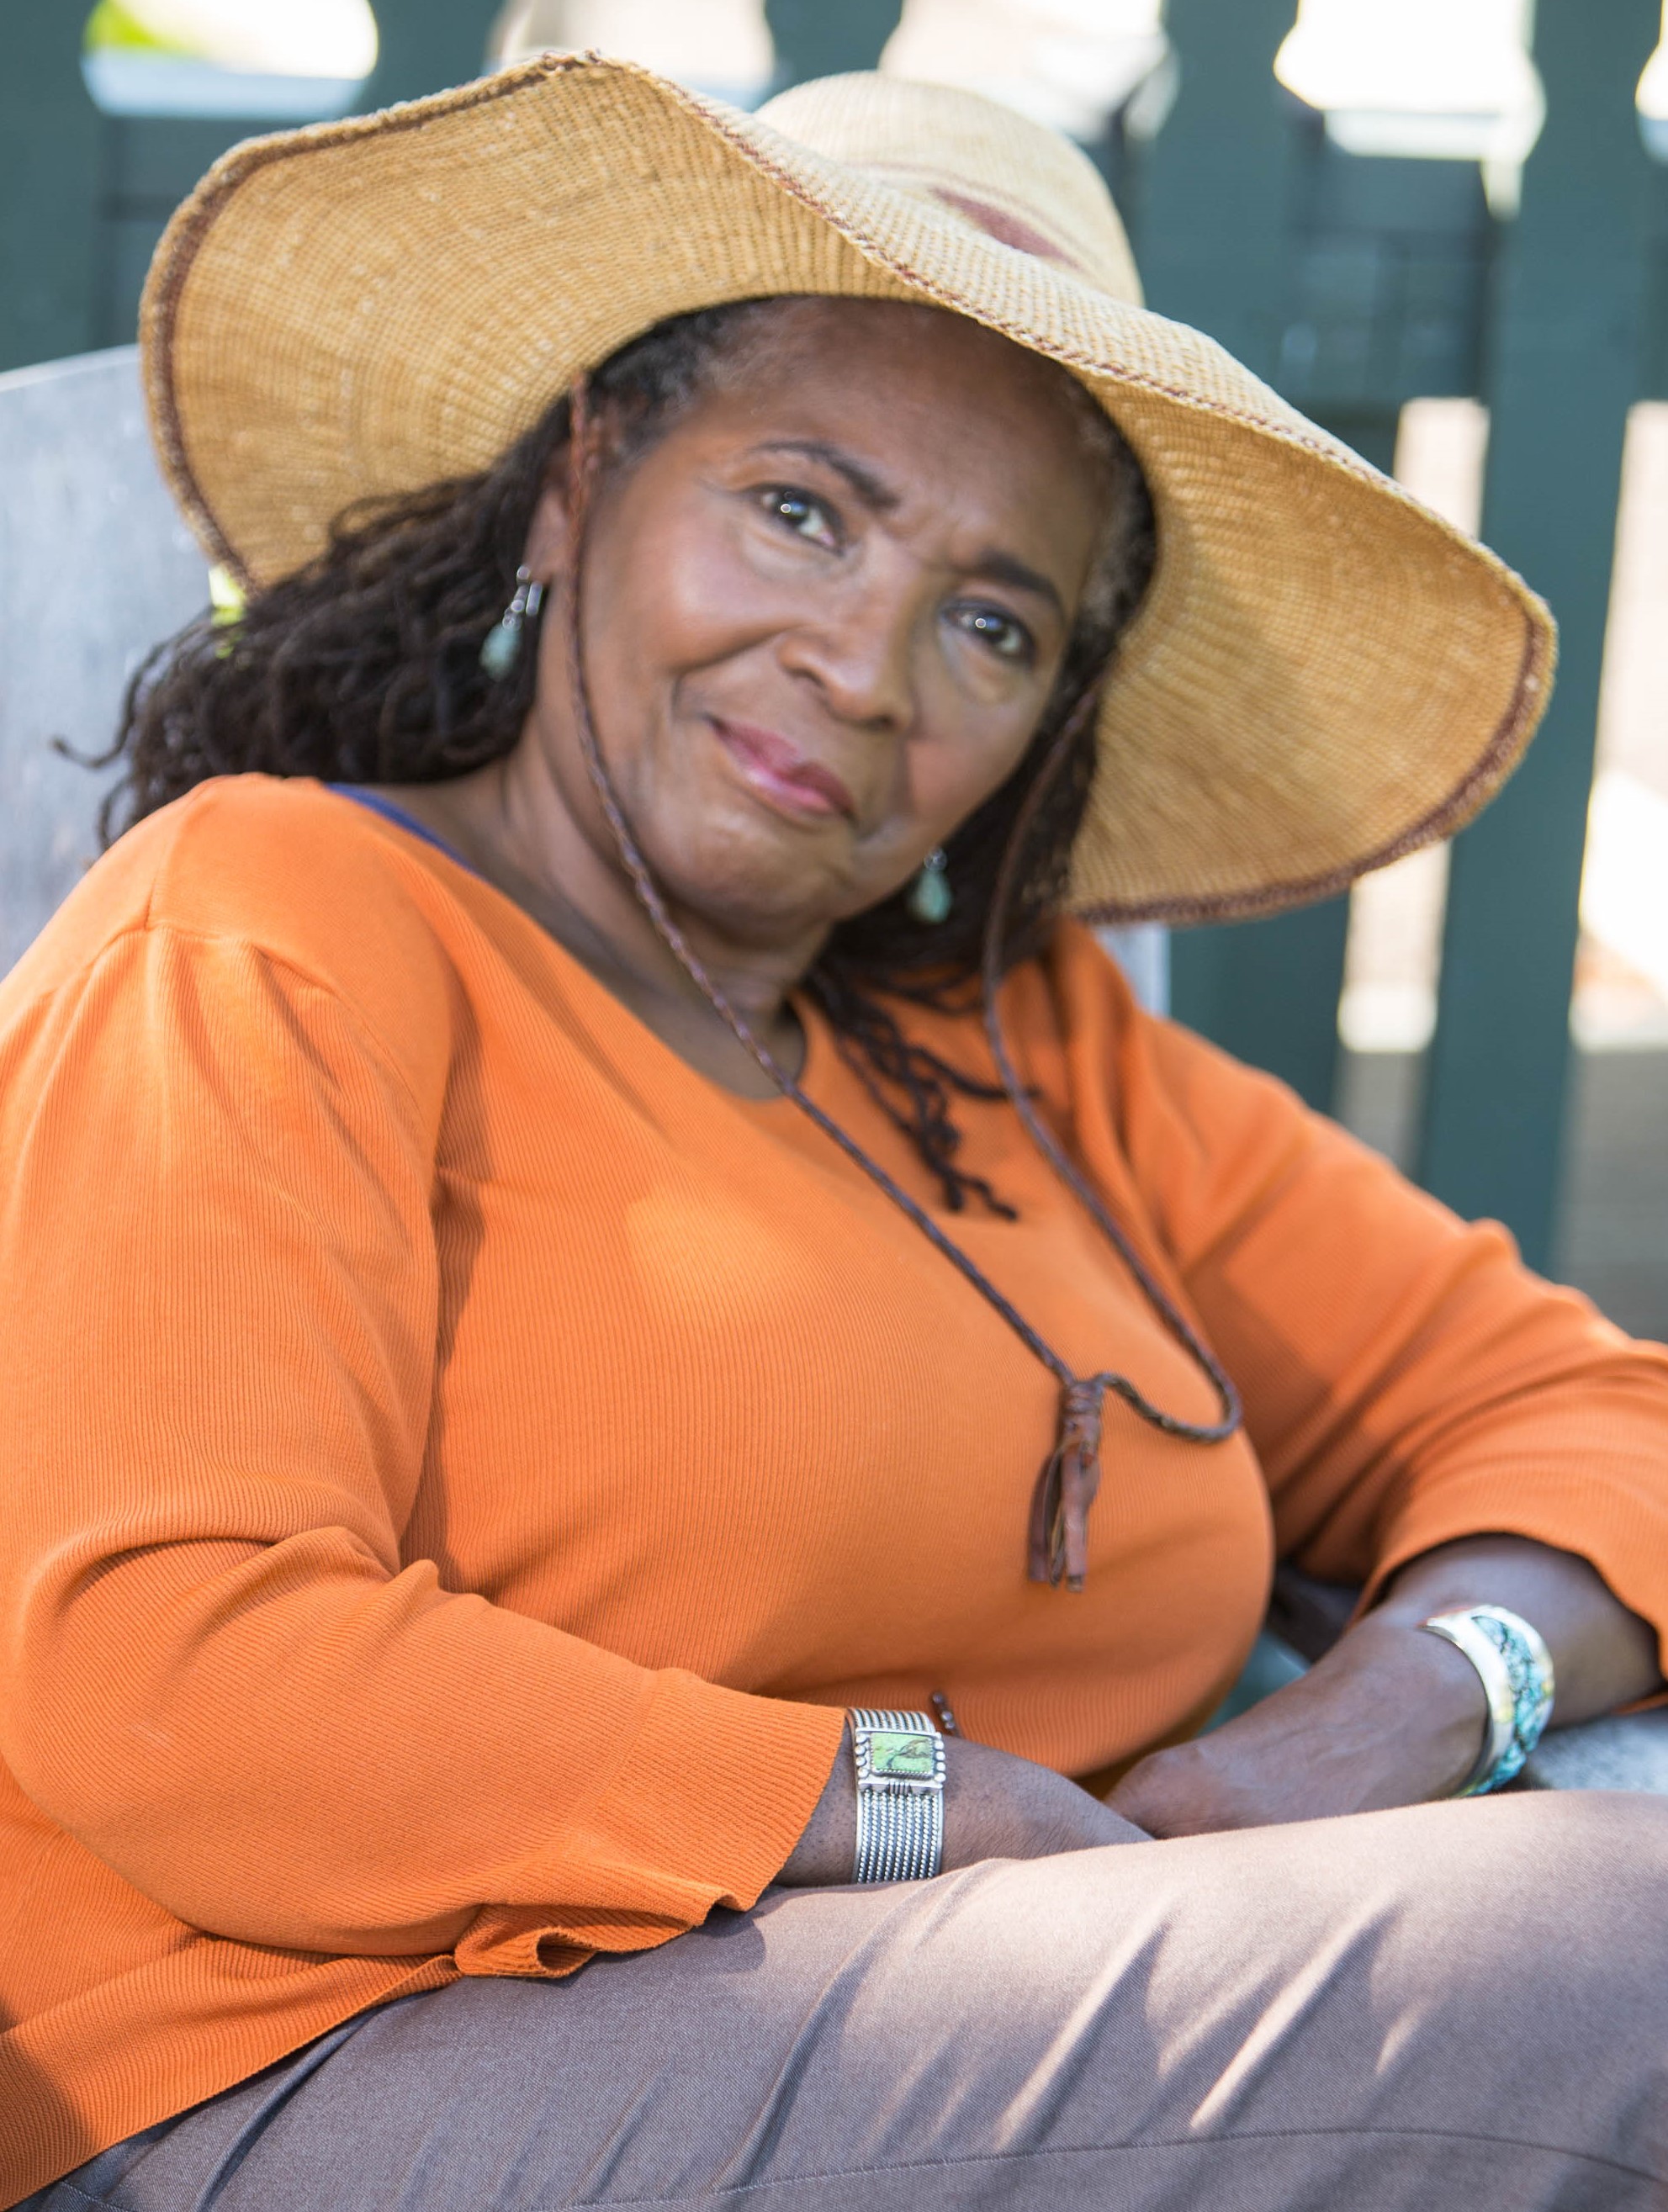 Black woman wearing a sun hat and orange sweatshirt smiling at the camera